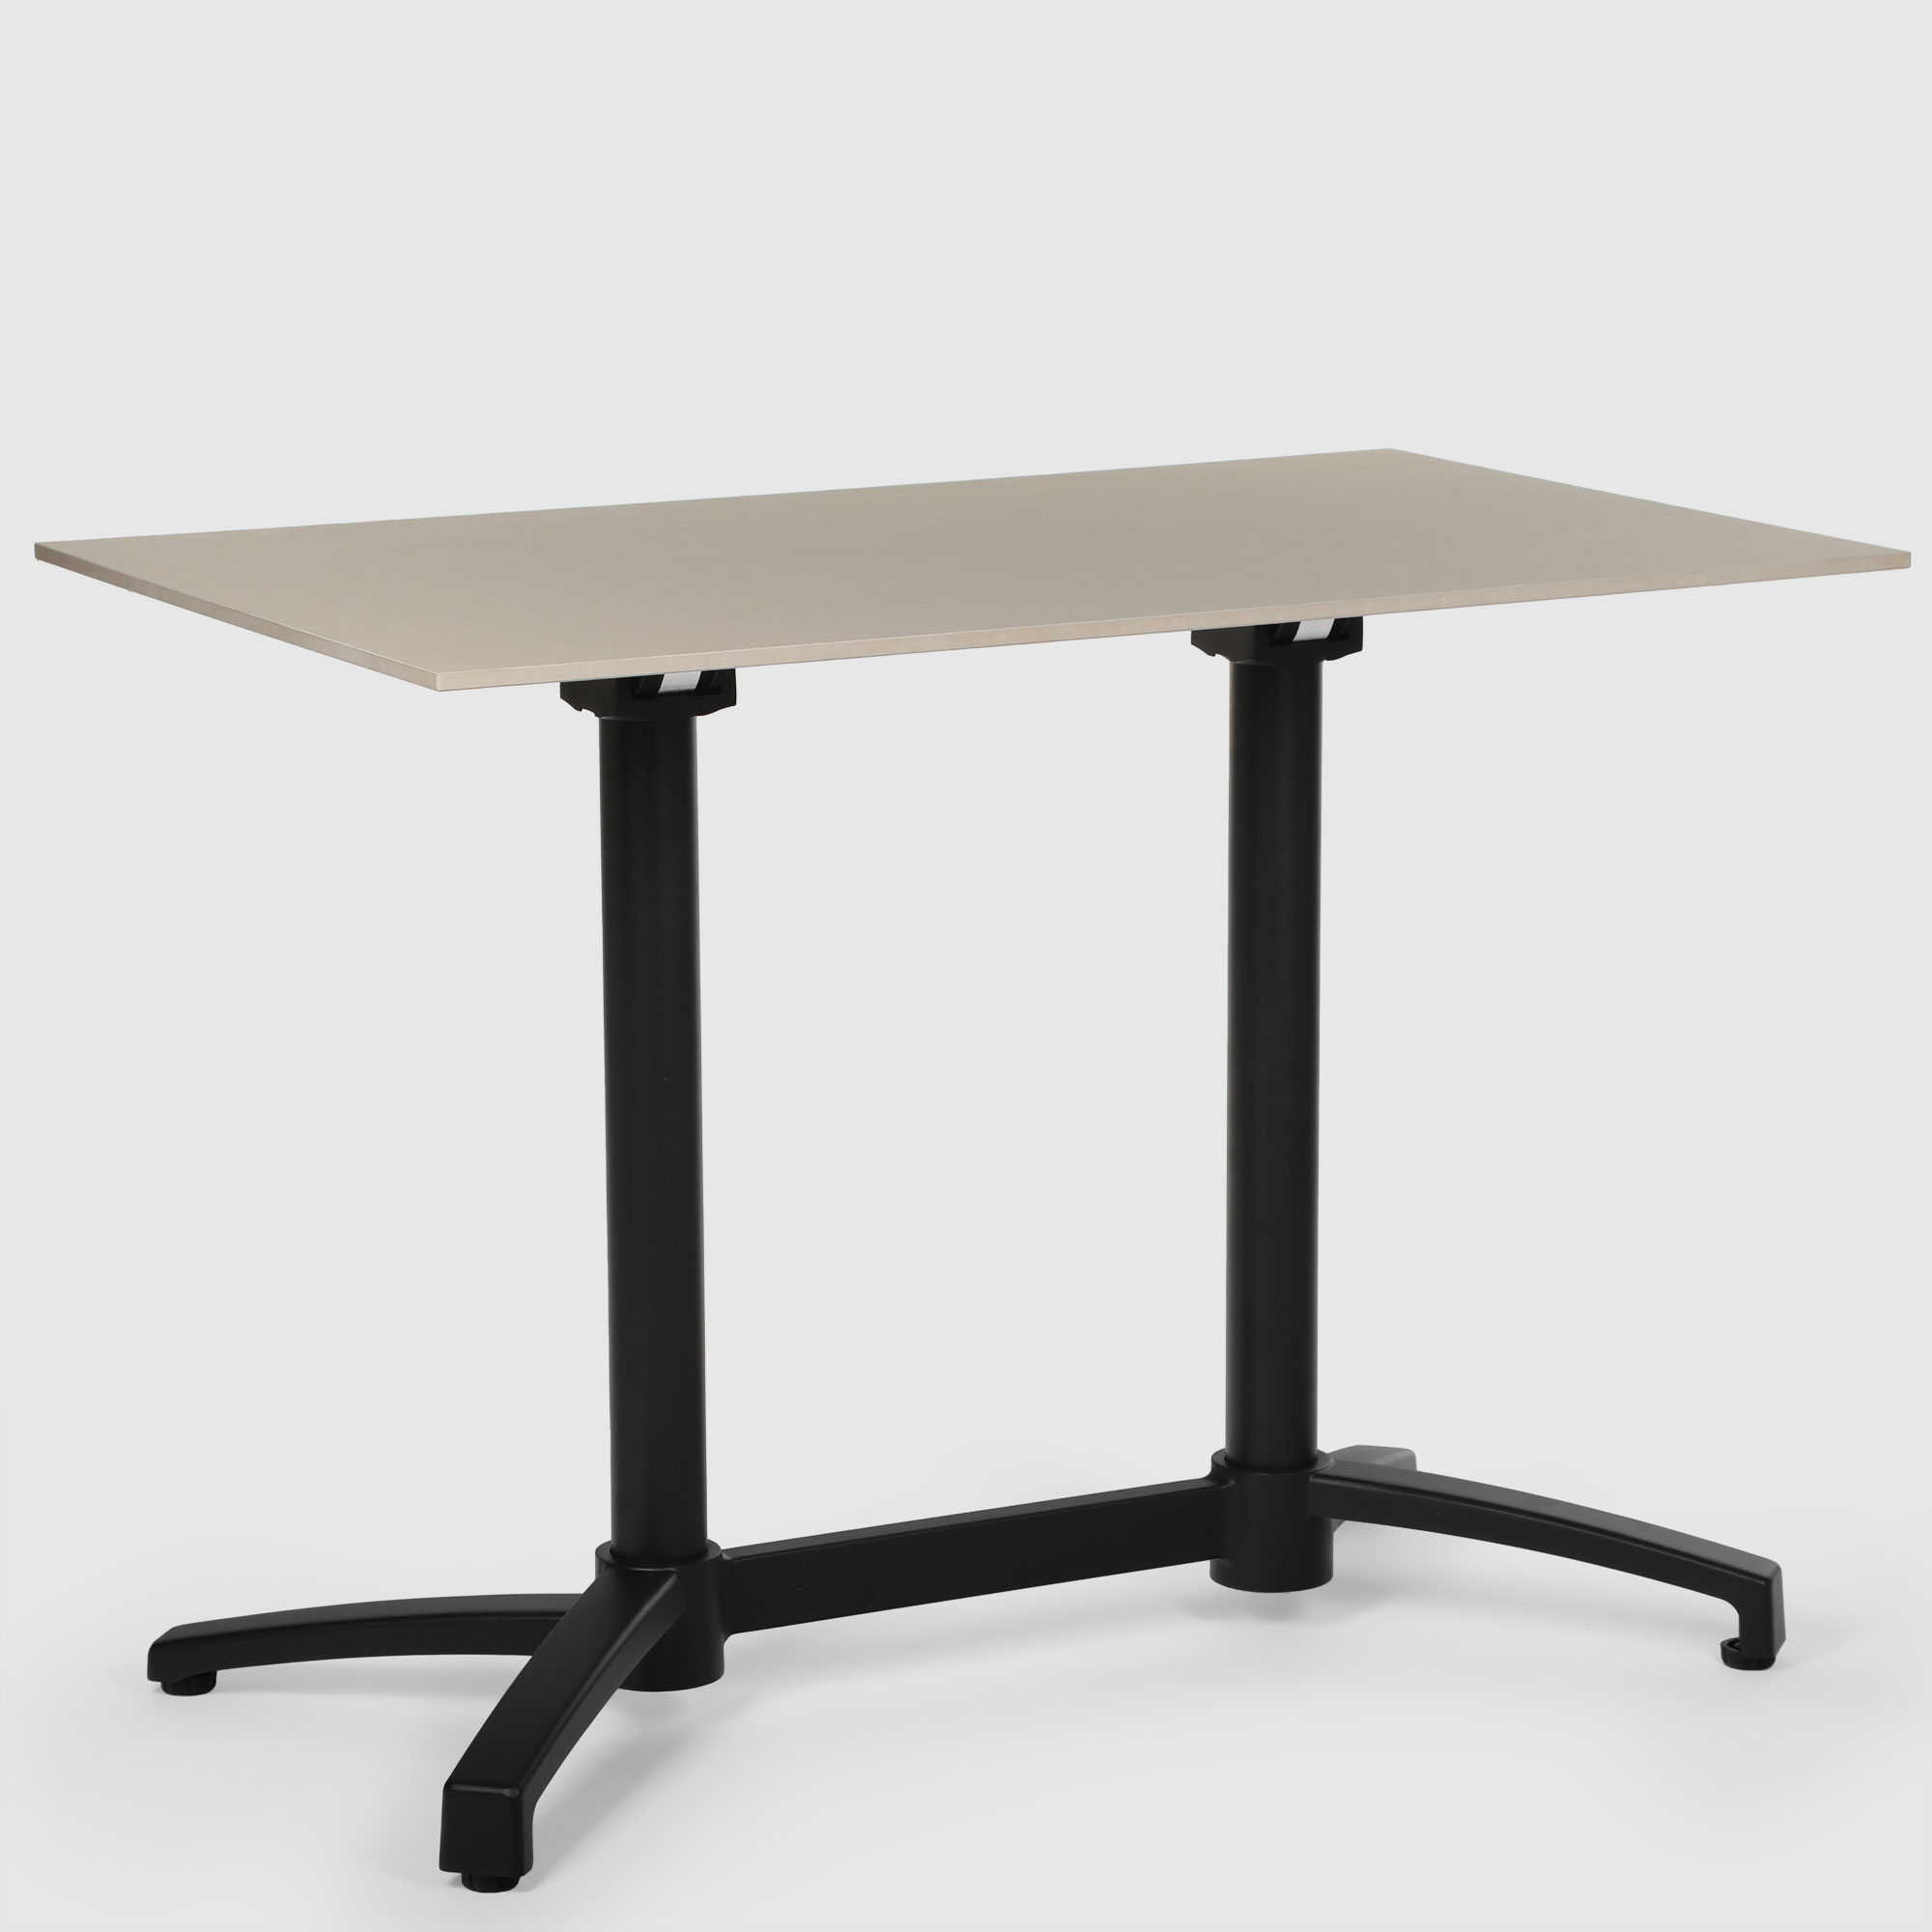 Стол Drigani Dakota double 100x60 см mayfair double pedestal стол обеденный